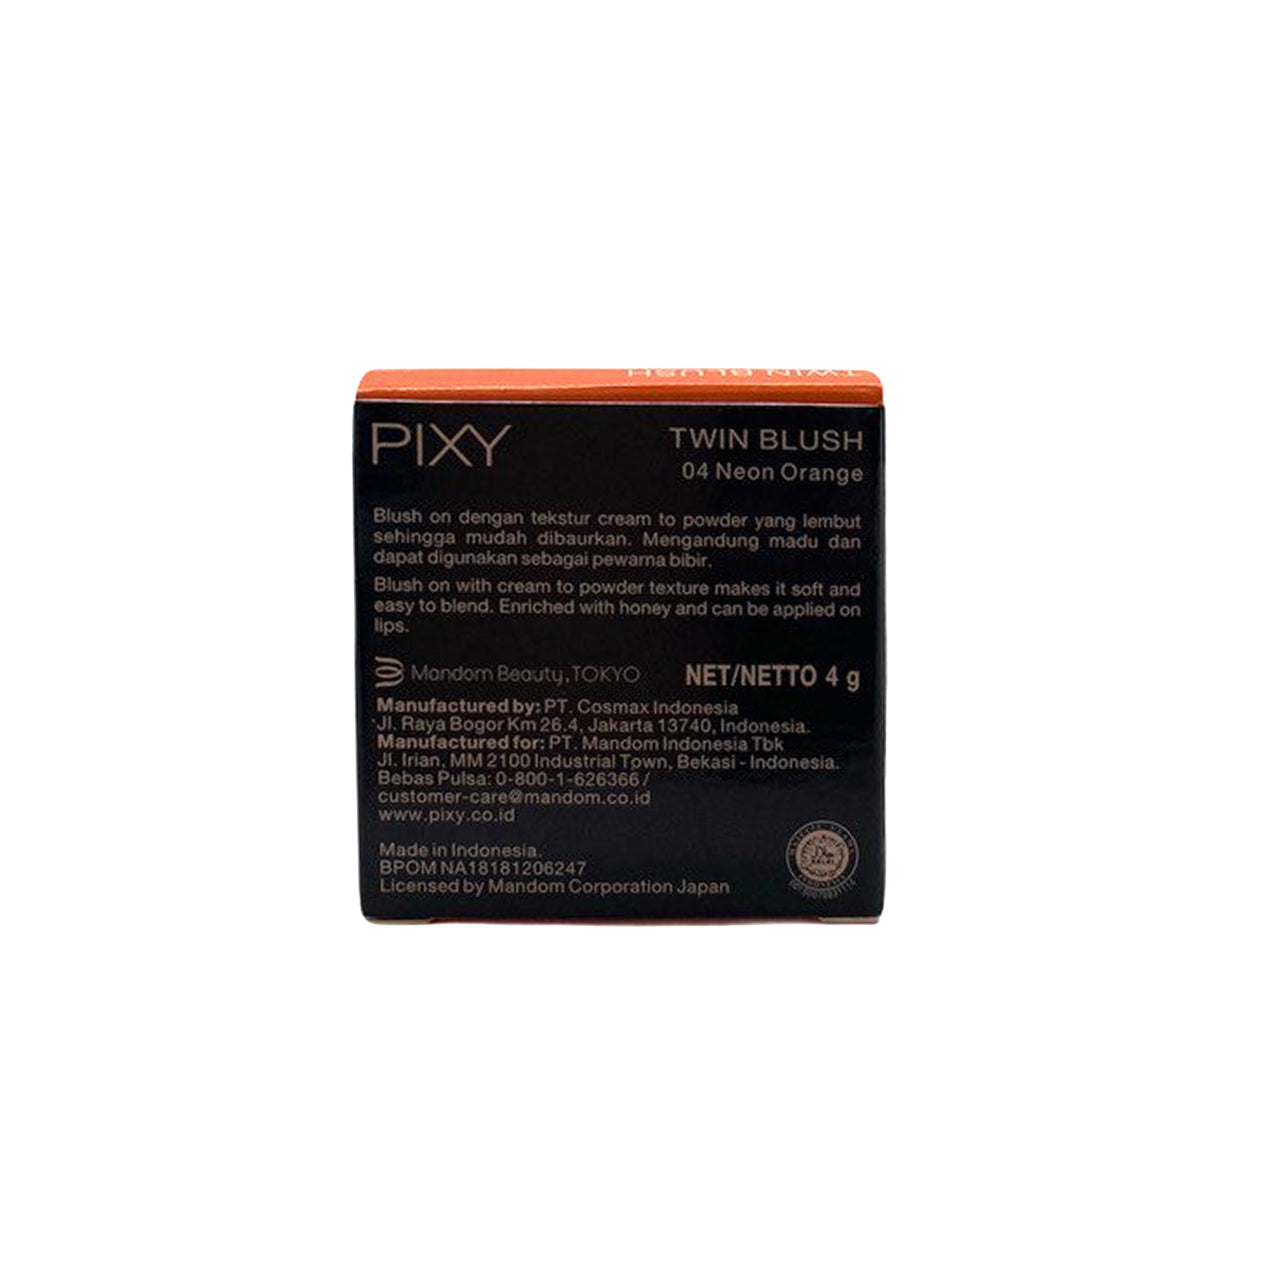 Pixy,Twin Blush 04 Neon Orange,4g